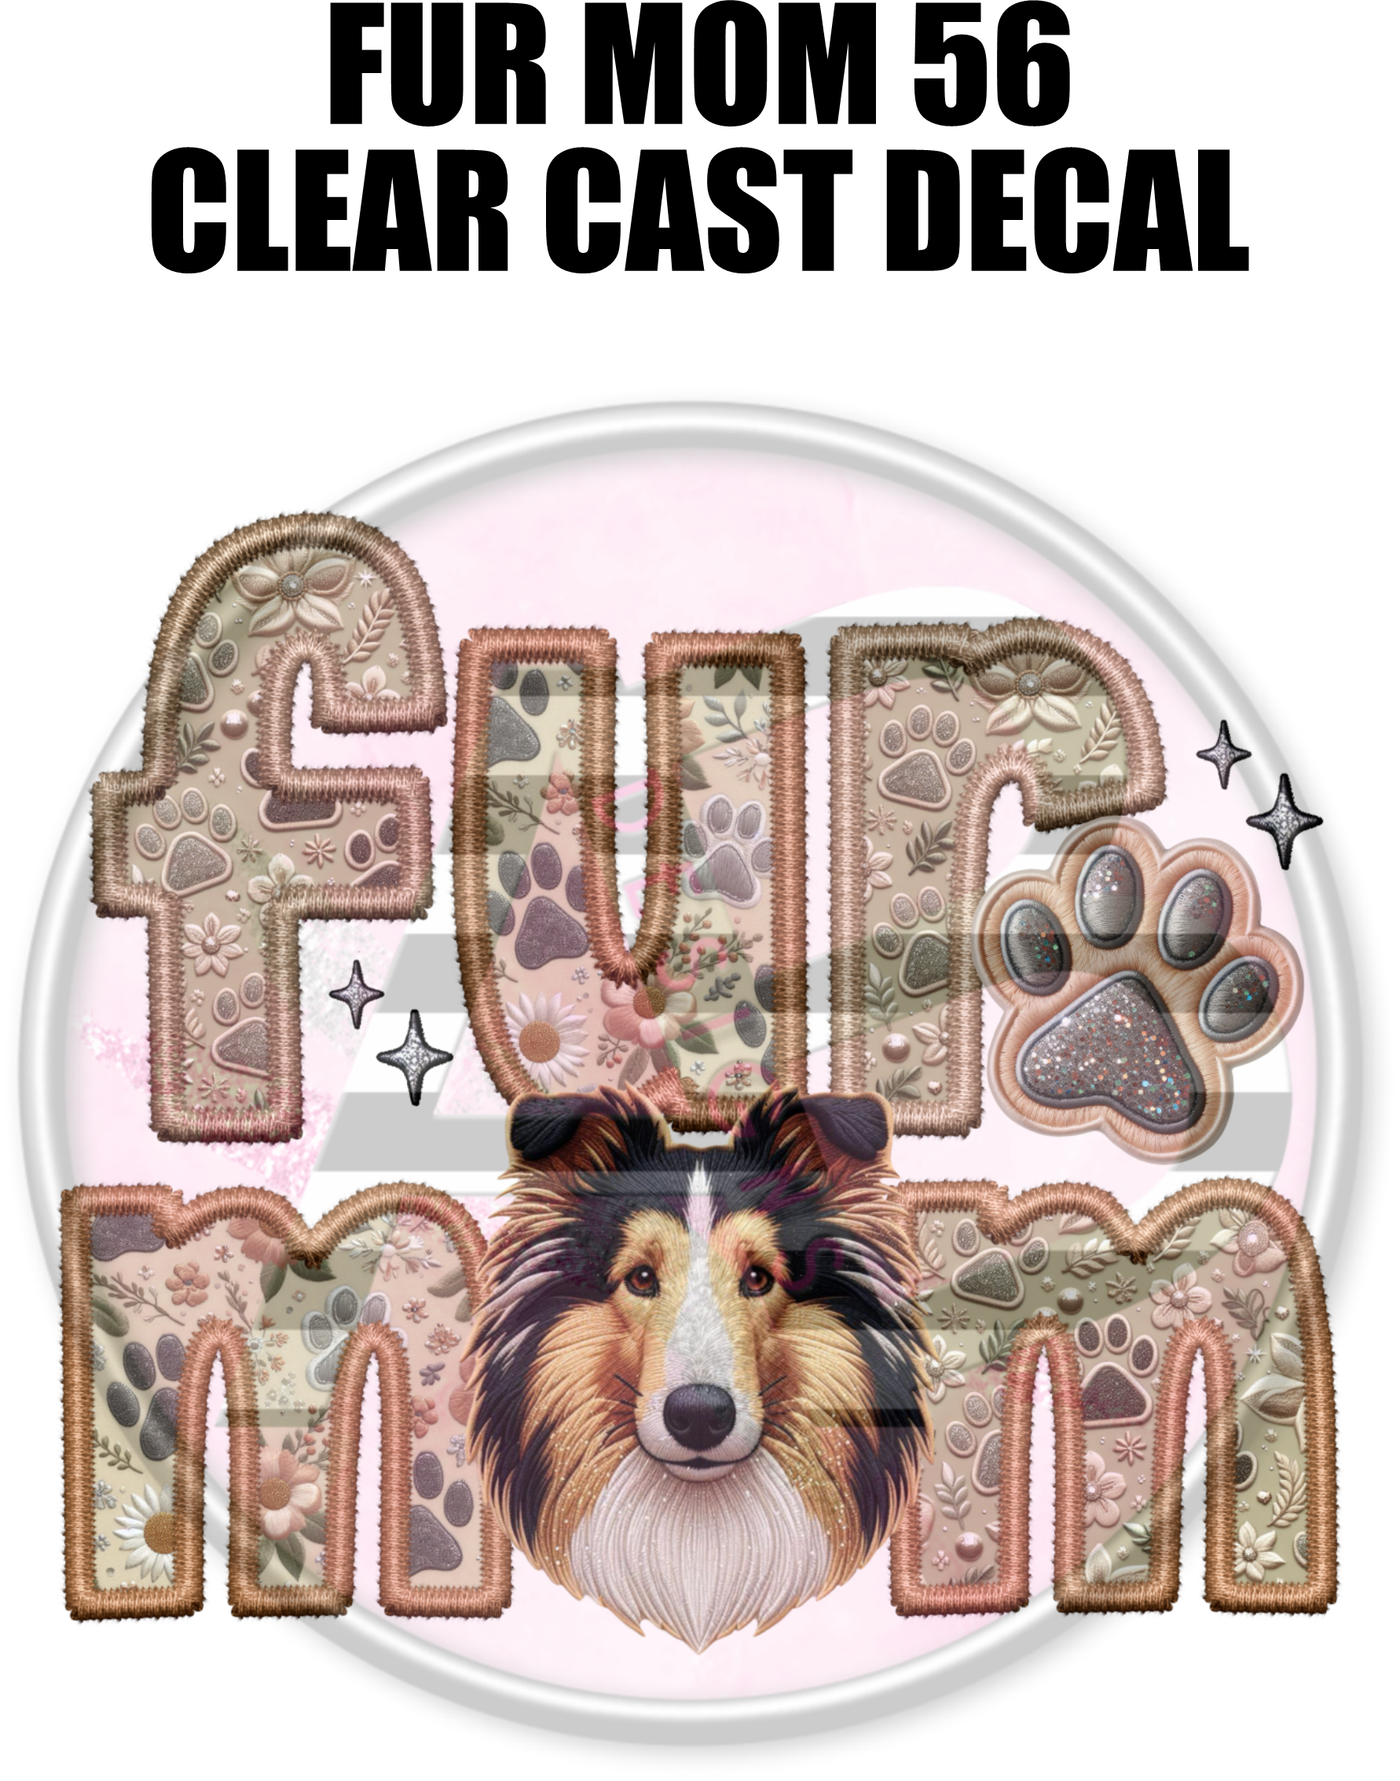 Fur Mom 56 - Clear Cast Decal